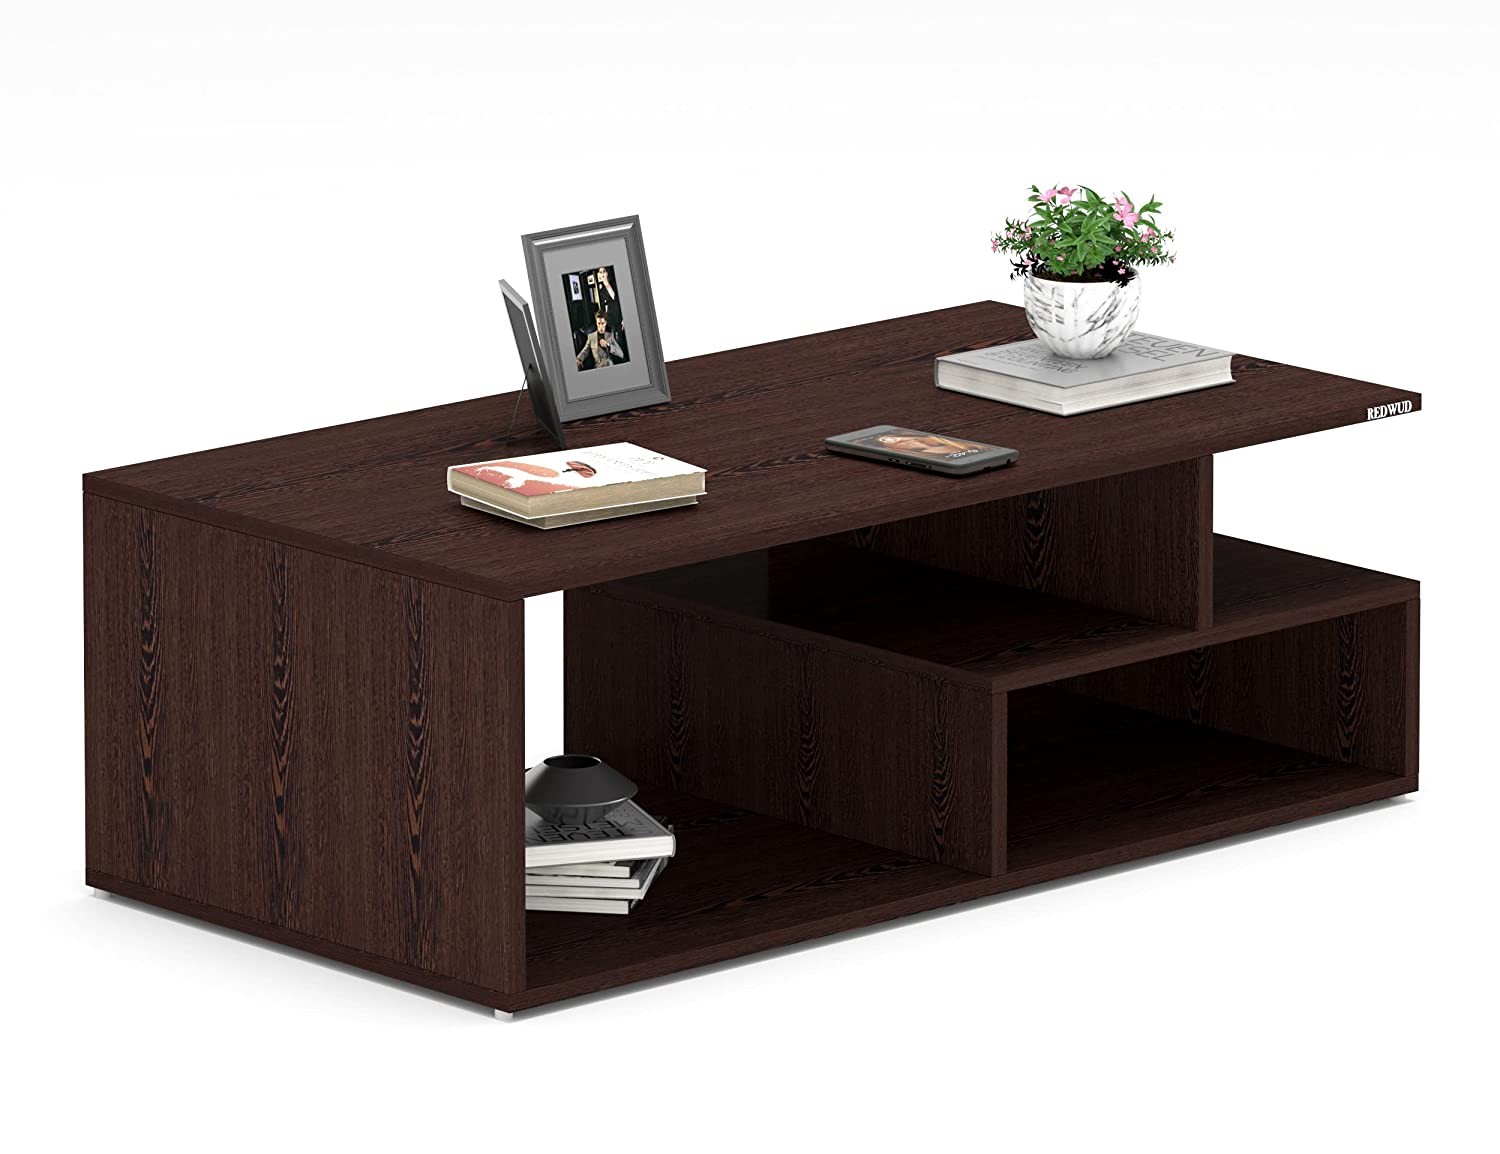 daric-engineered-wood-coffee-table-rd-daric-w